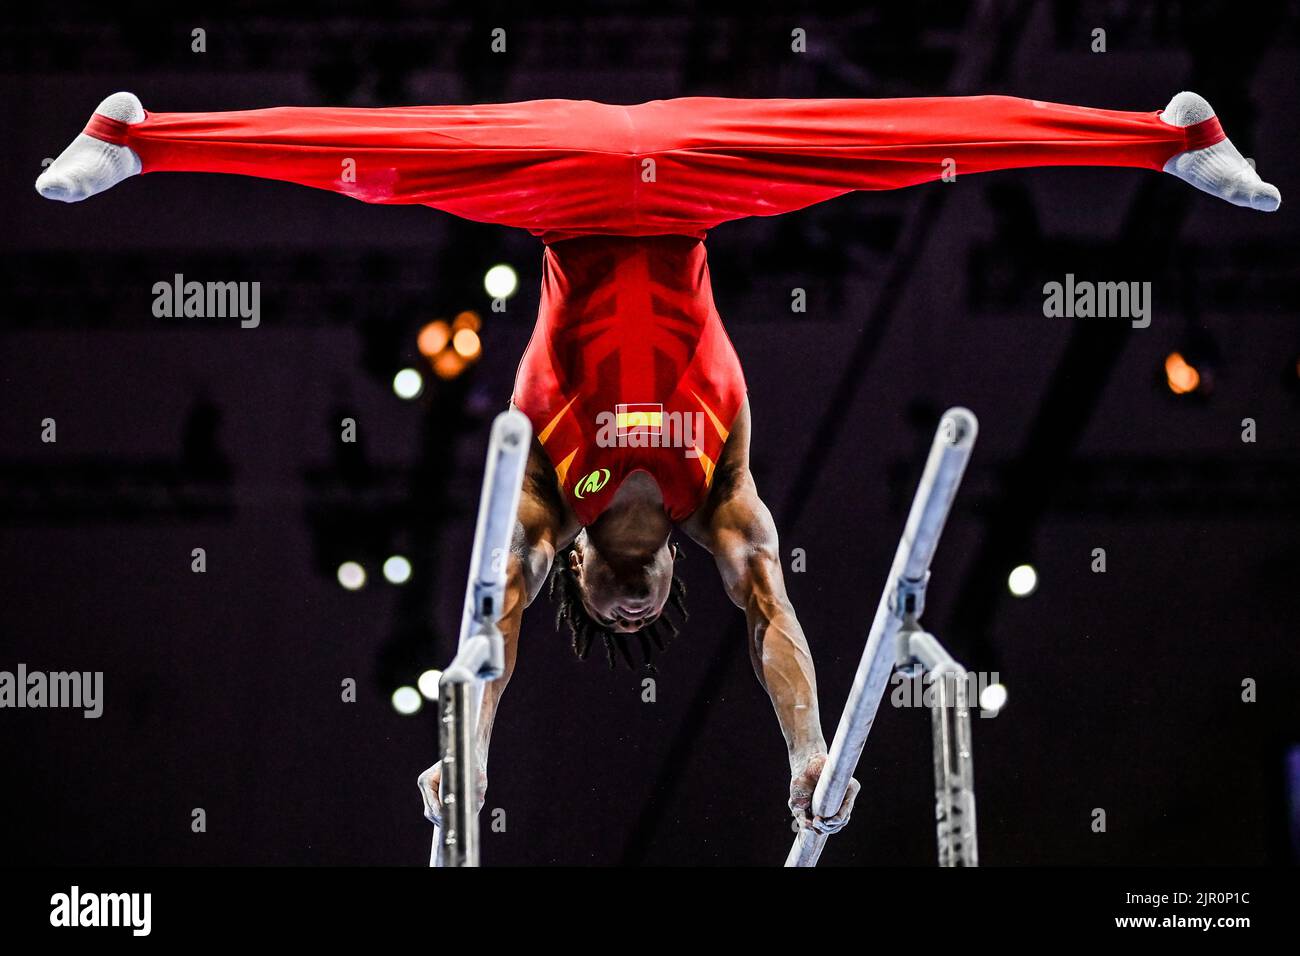 Spain, parallel bar rotation. European Championships Munich 2022: Artistic Gymnastics, Men's finals Stock Photo